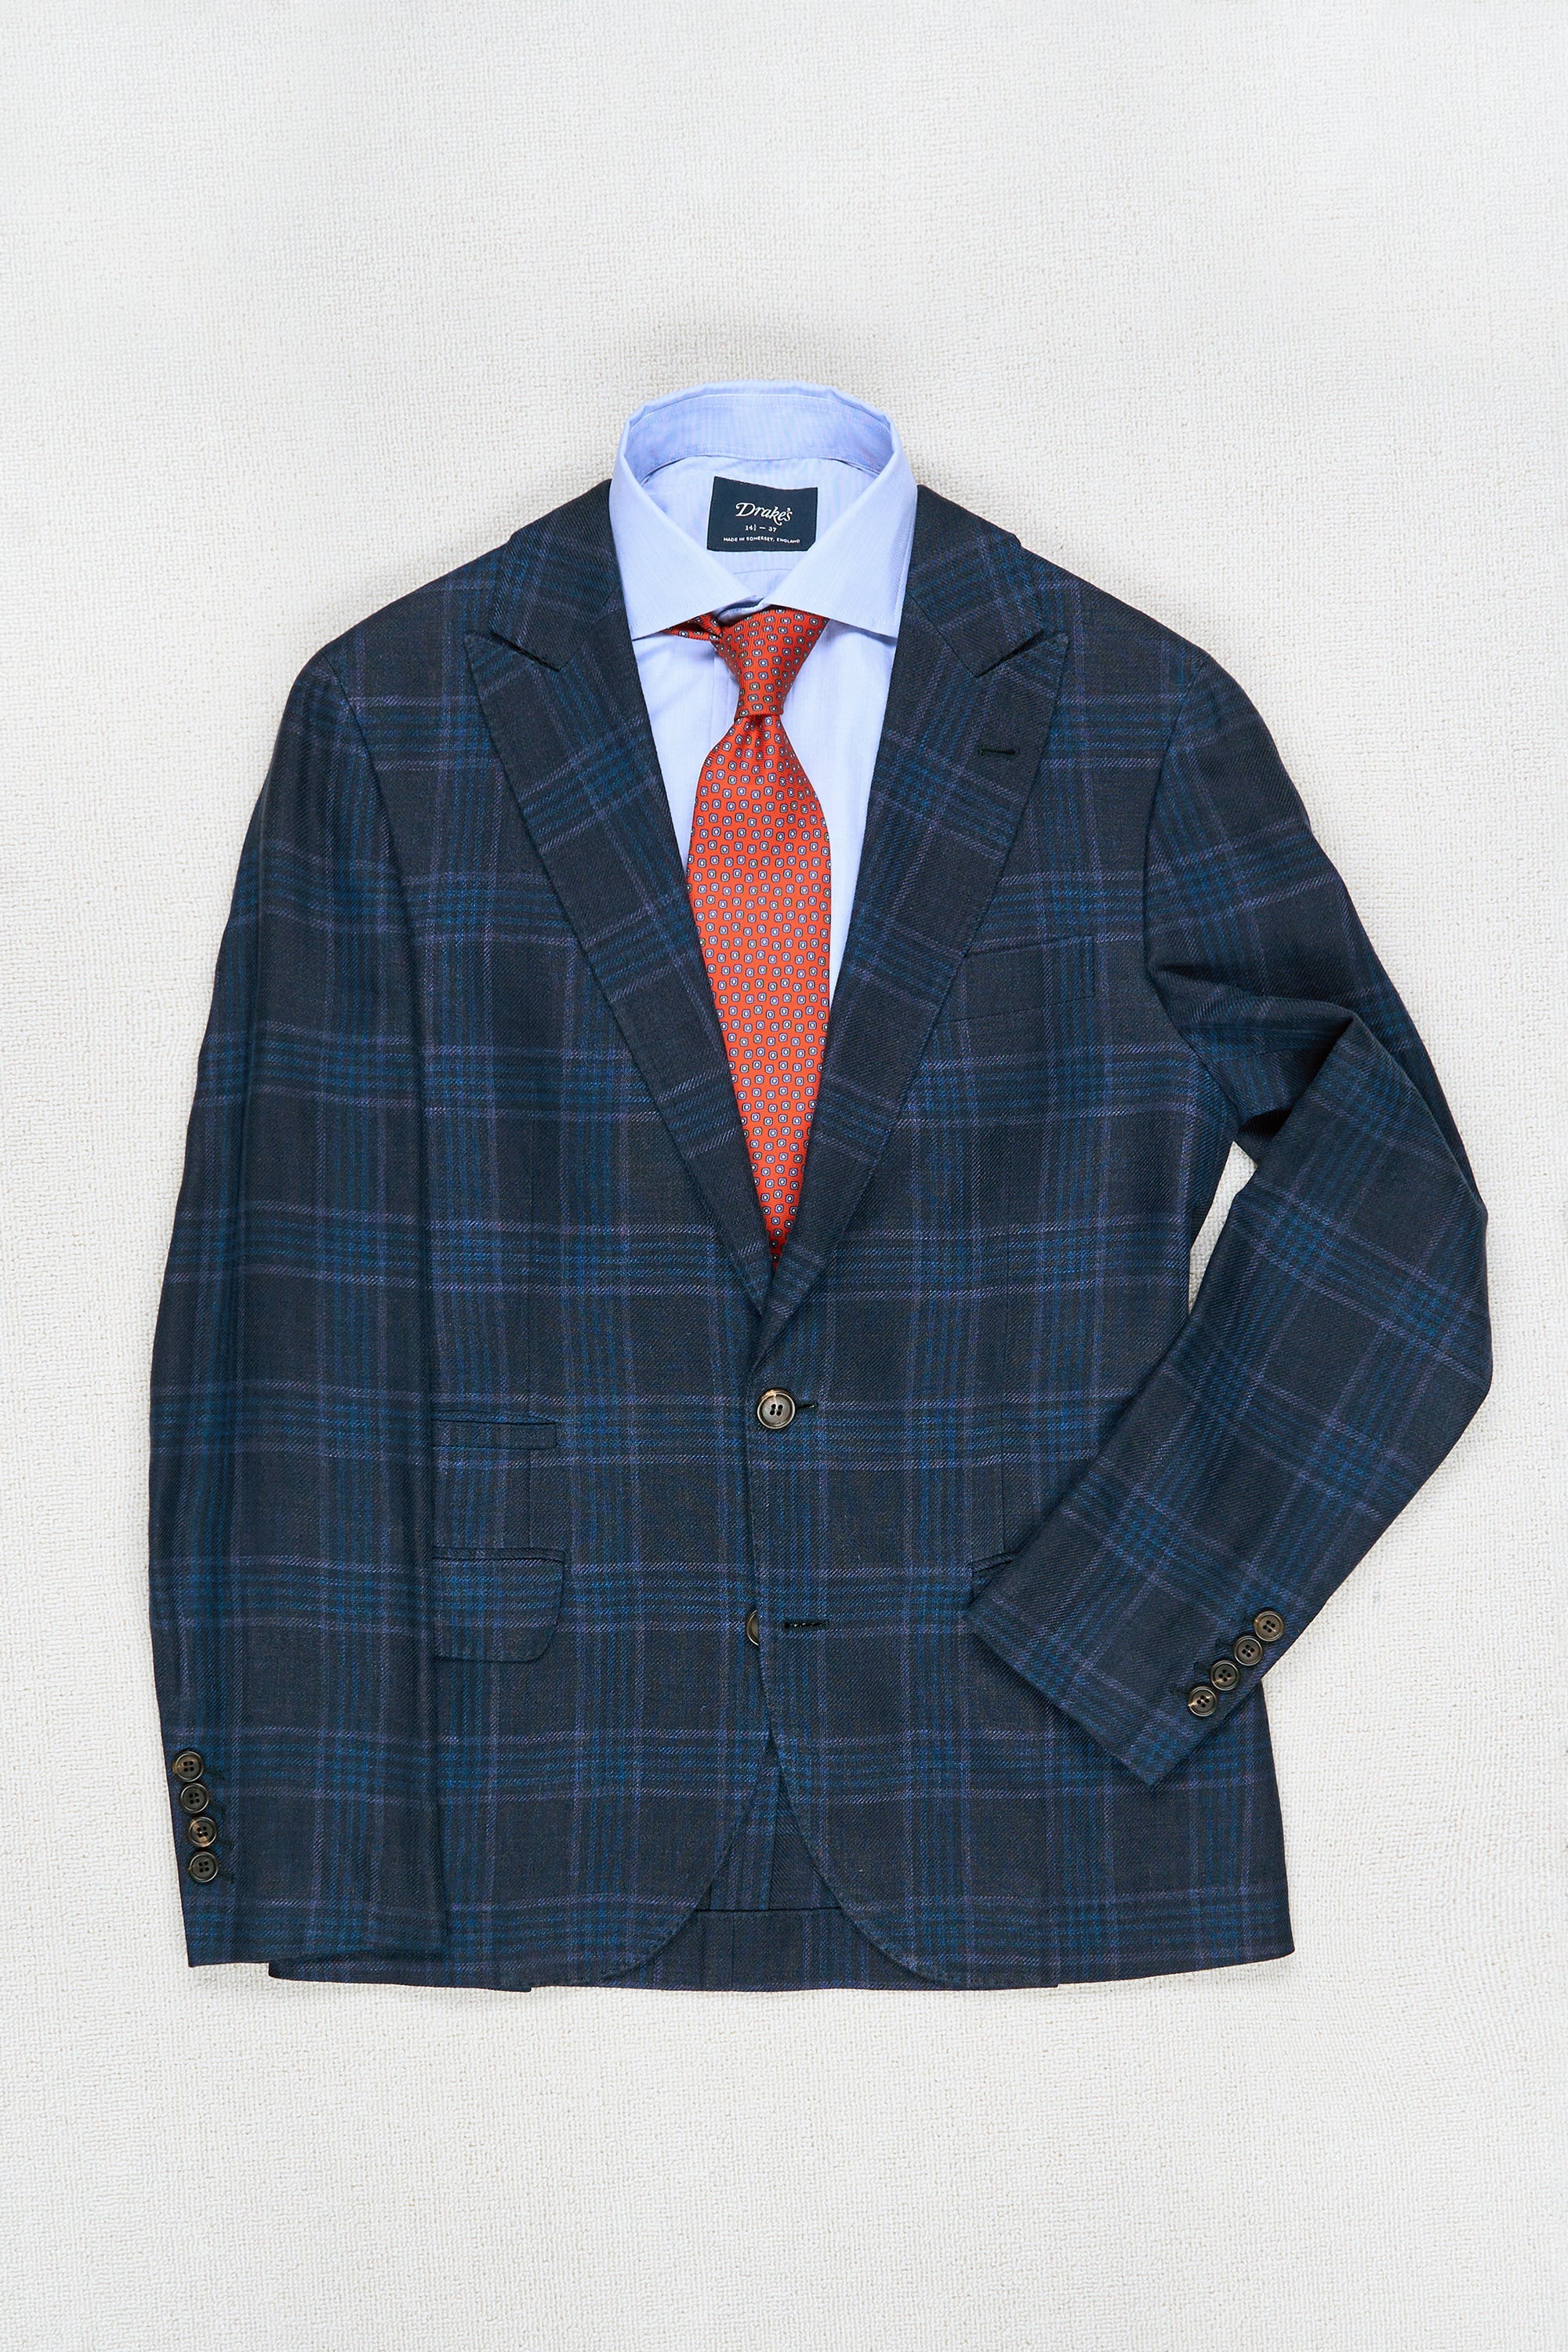 Brunello Cucinelli Navy with Blue/Purple Check Linen/Wool/Silk Sport Coat